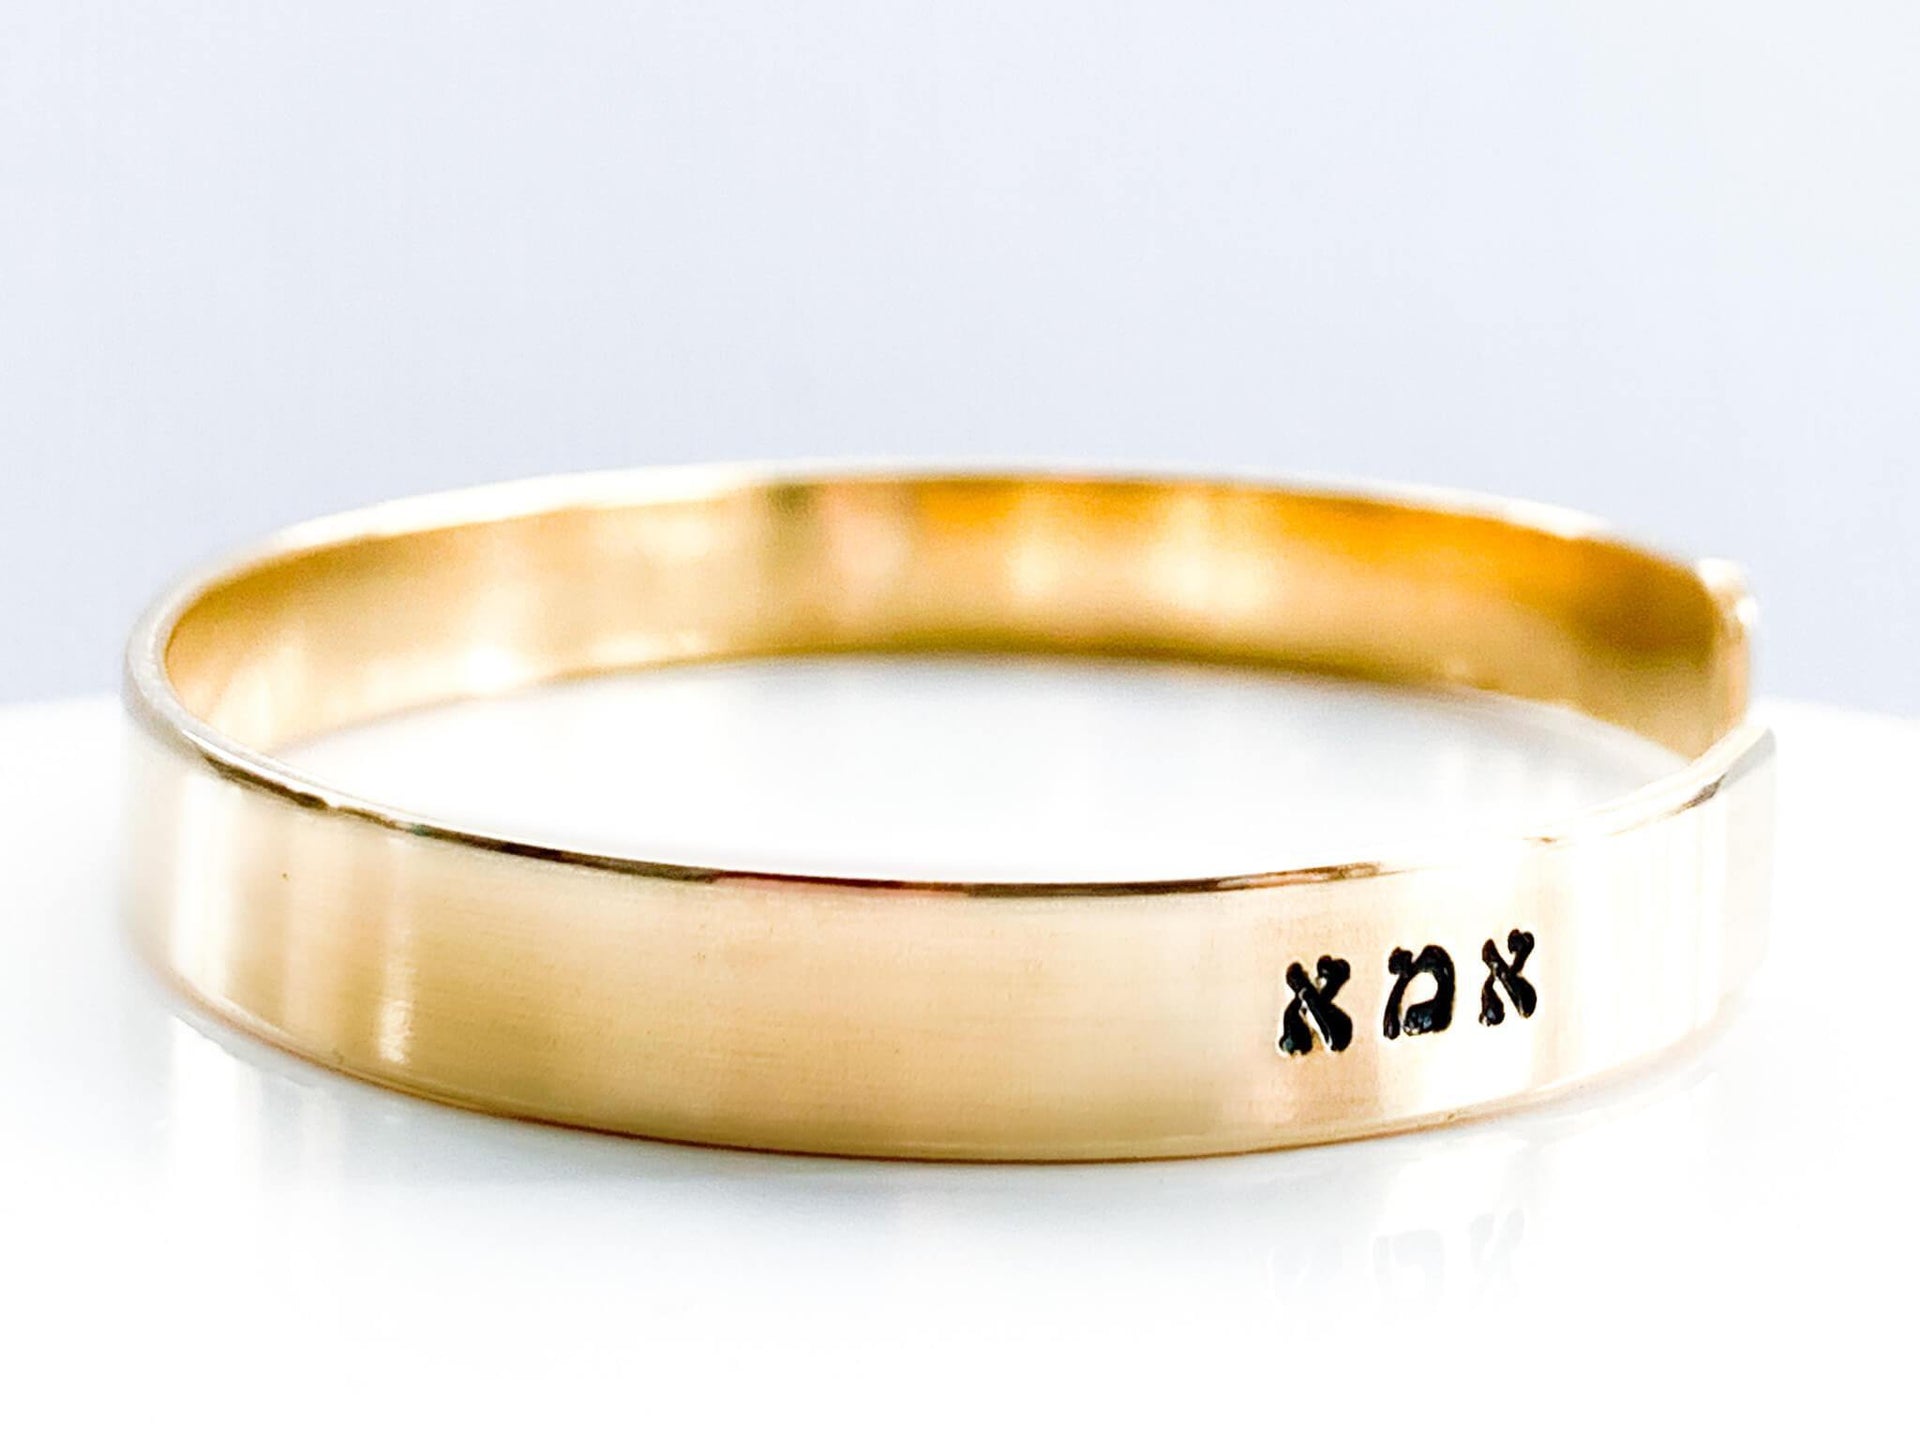 Everything Beautiful Bracelets Brass Ima (Mom) Hebrew Bracelet - Brass, Copper or Aluminum